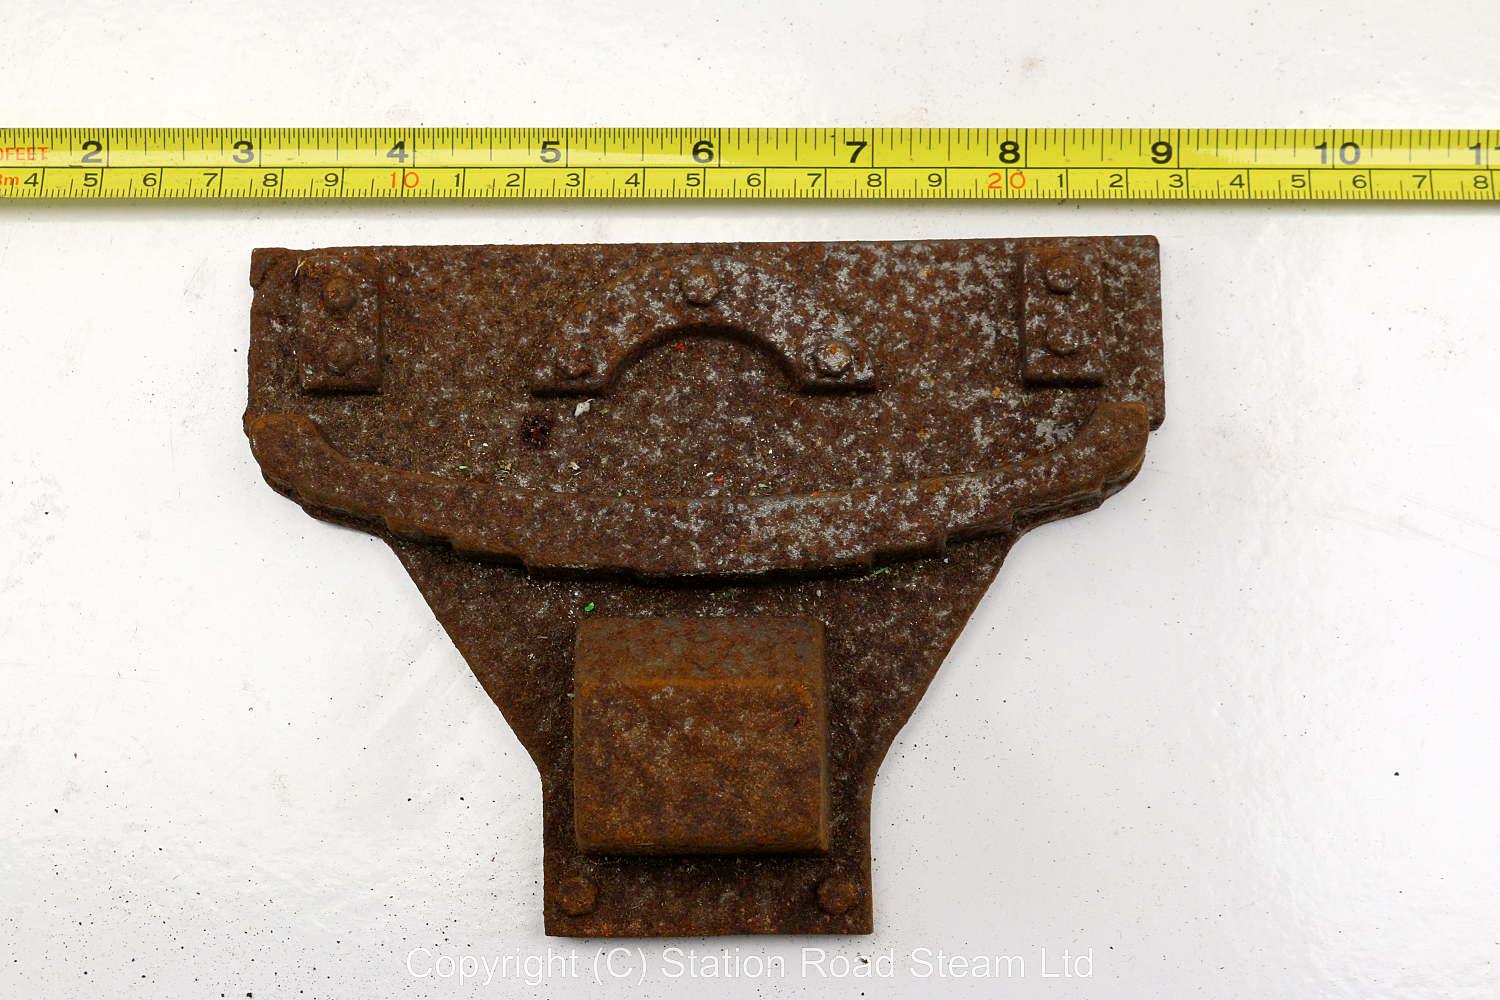 Eight 7 1/4 inch gauge axlebox pillar castings